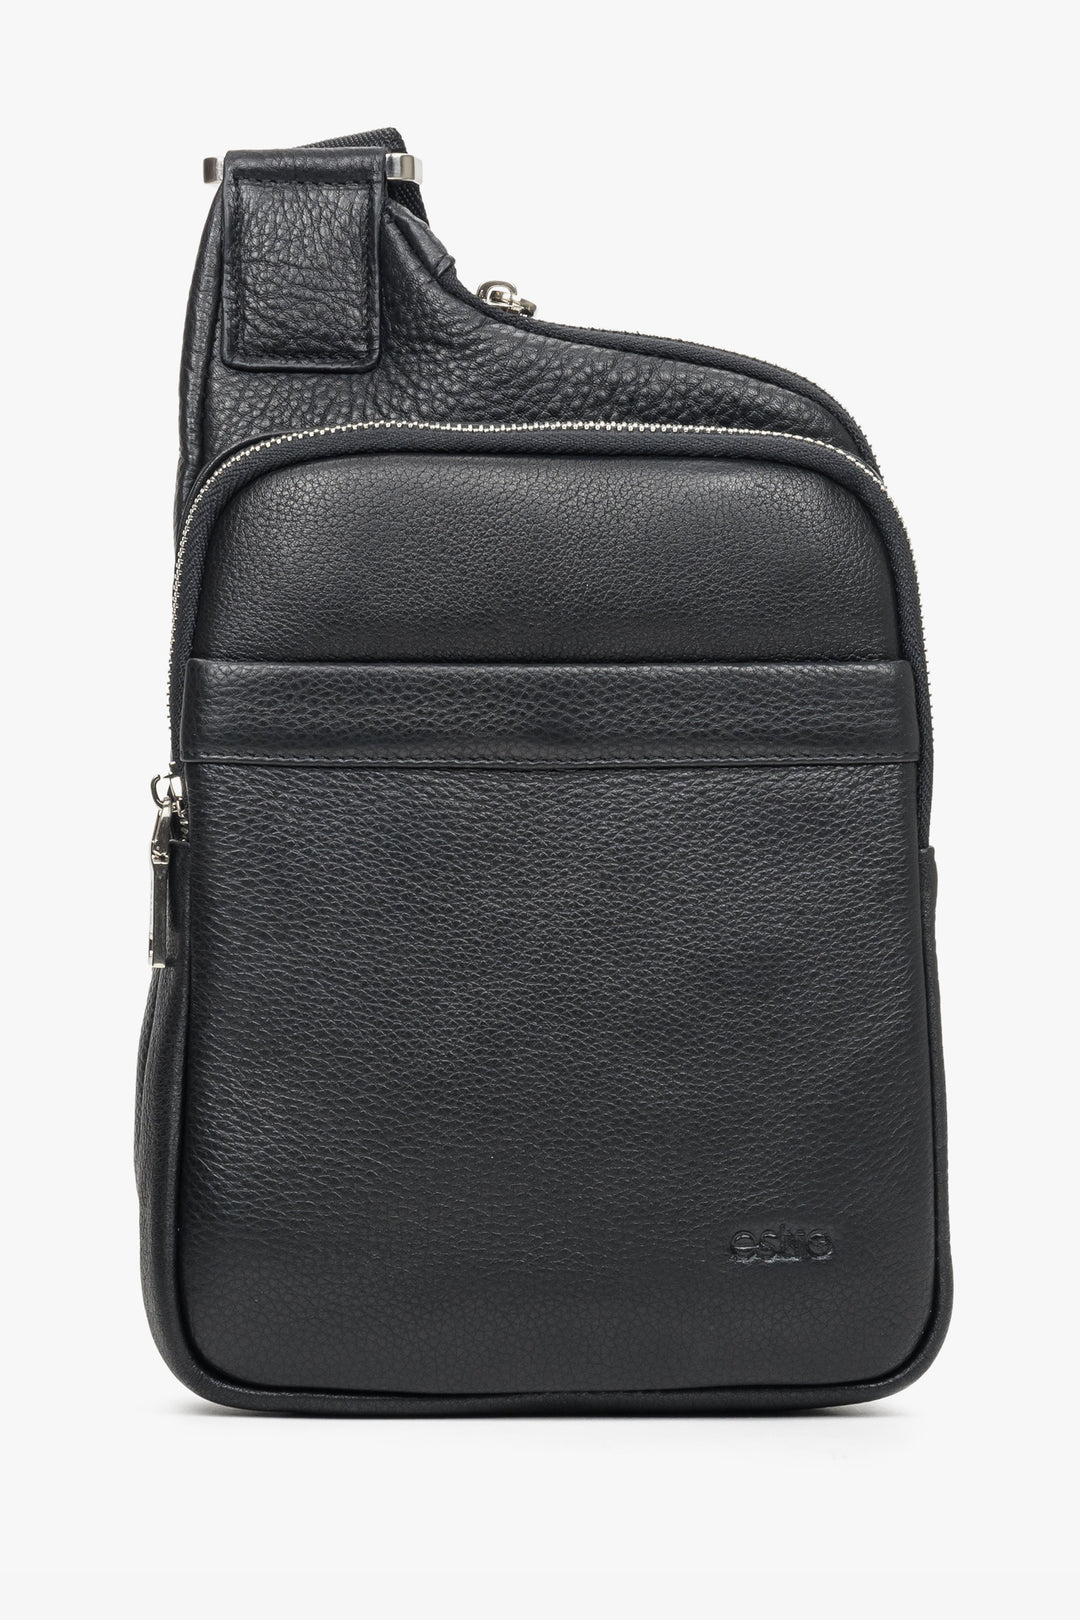 Men's black waist bag made of genuine leather by Estro.